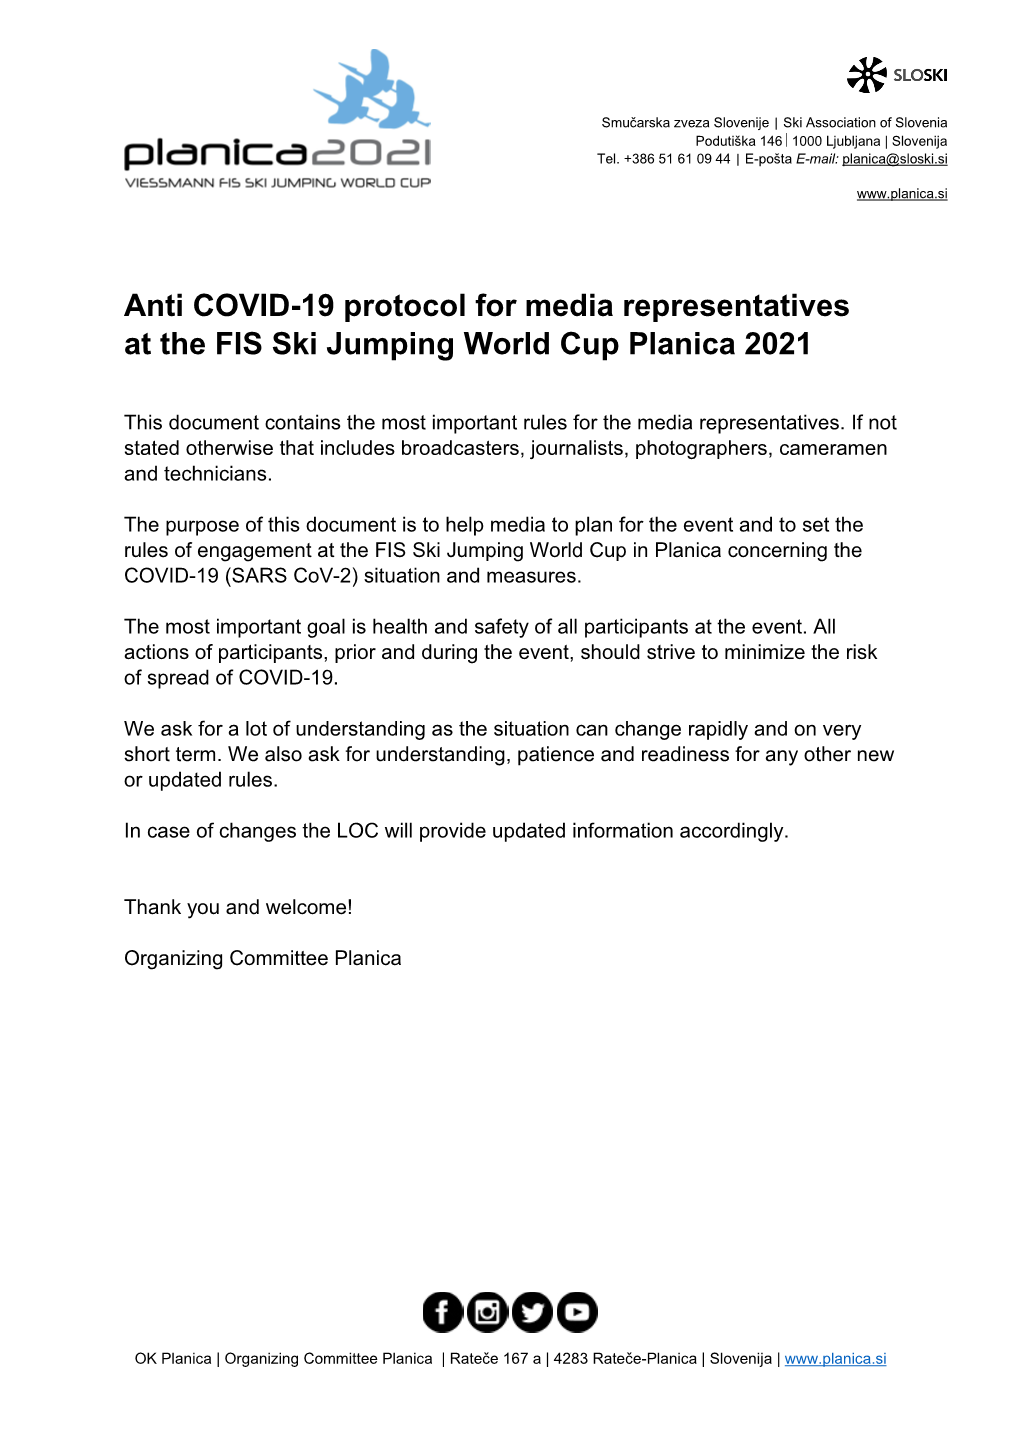 Anti COVID-19 Protocol for Media Representatives at the FIS Ski Jumping World Cup Planica 2021